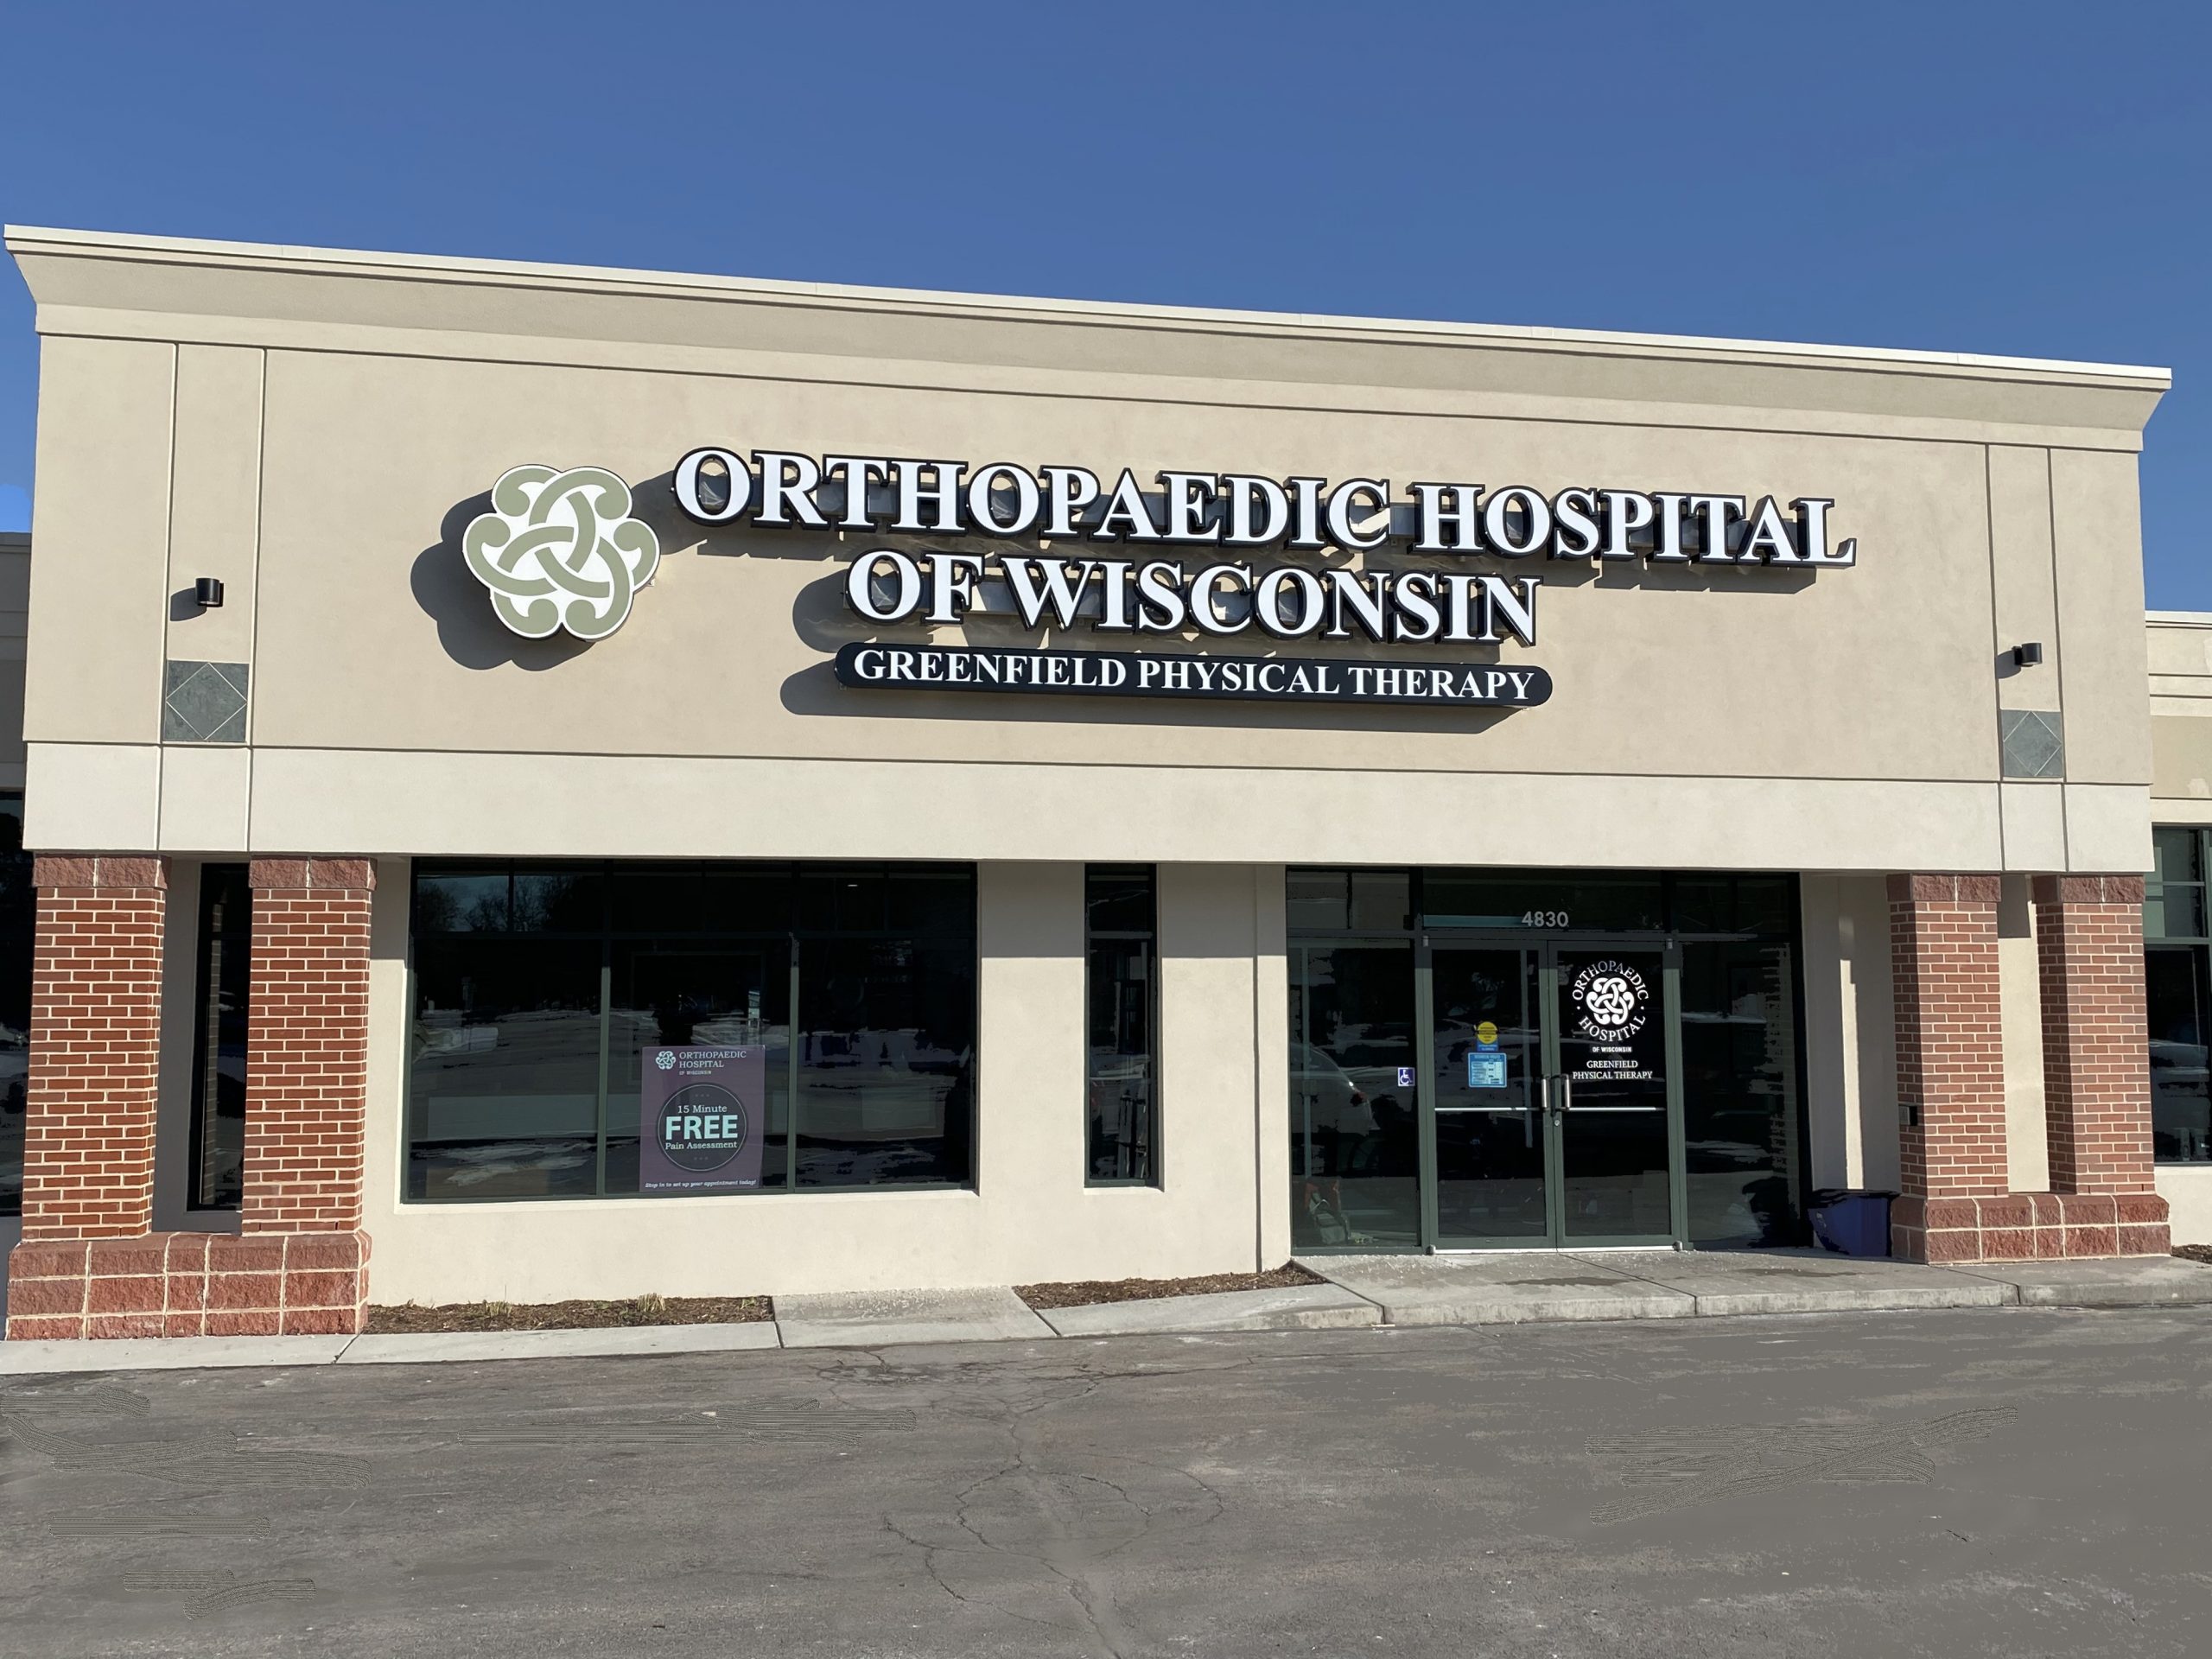 Orthopaedic Hospital Of Wisconsin - Greenfield Physical Therapy - Orthopaedic Hospital Of Wisconsin